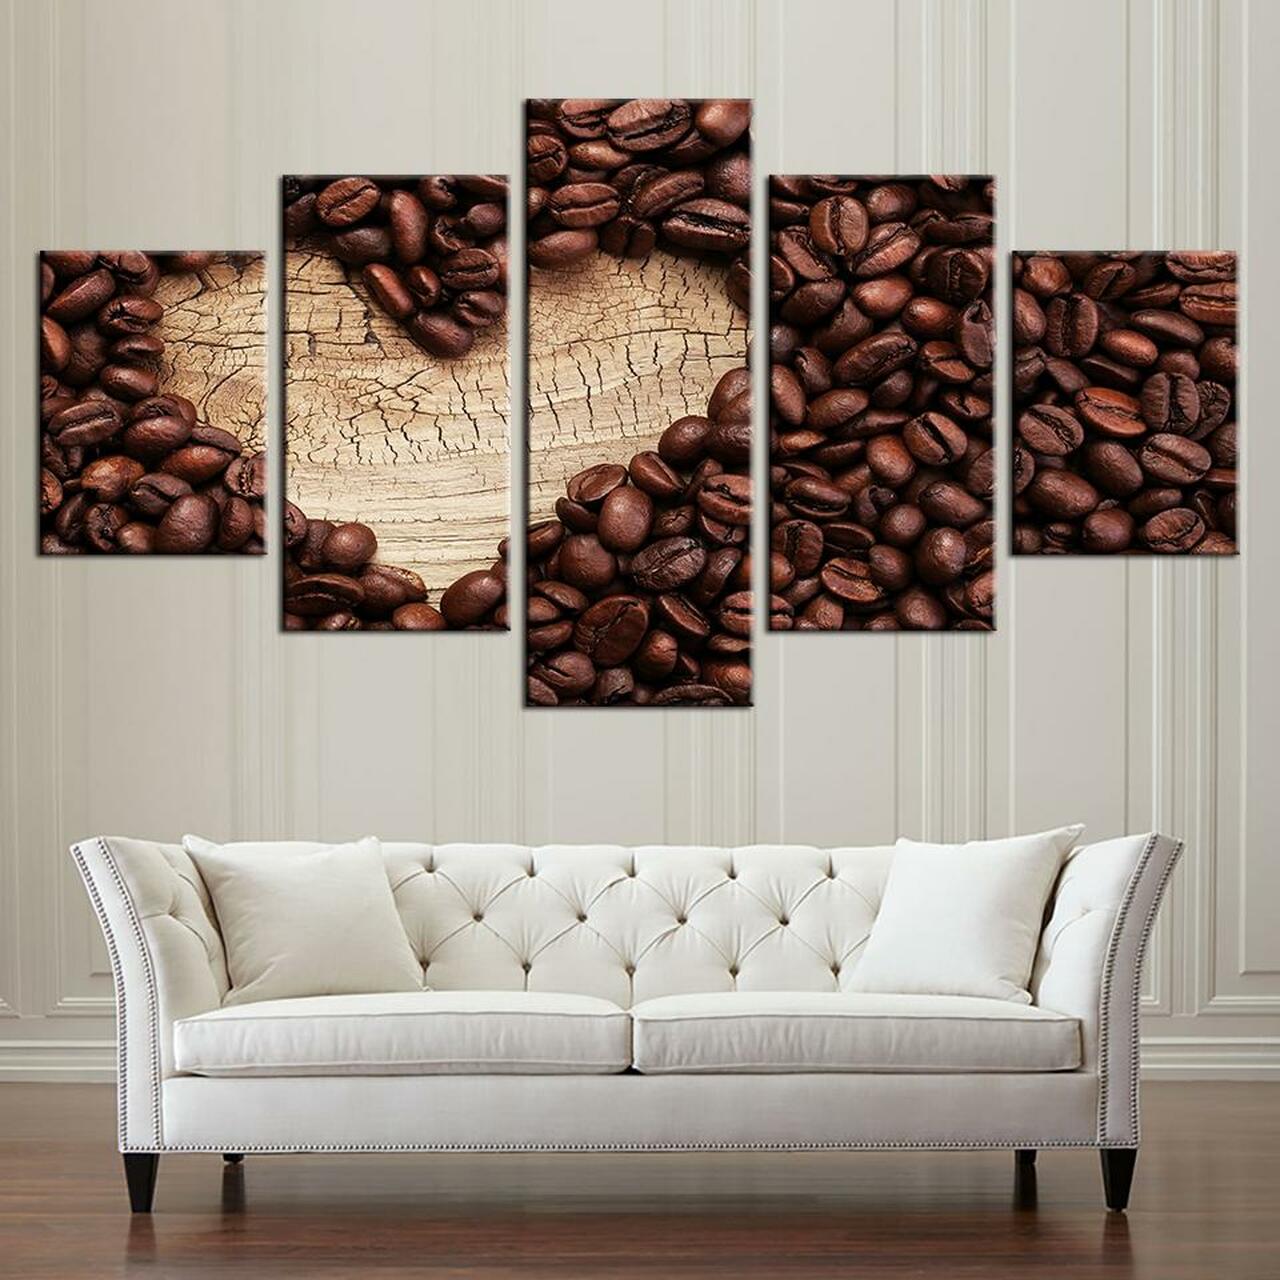 COFFEE HEART 5 Piece Canvas Art Wall Decor